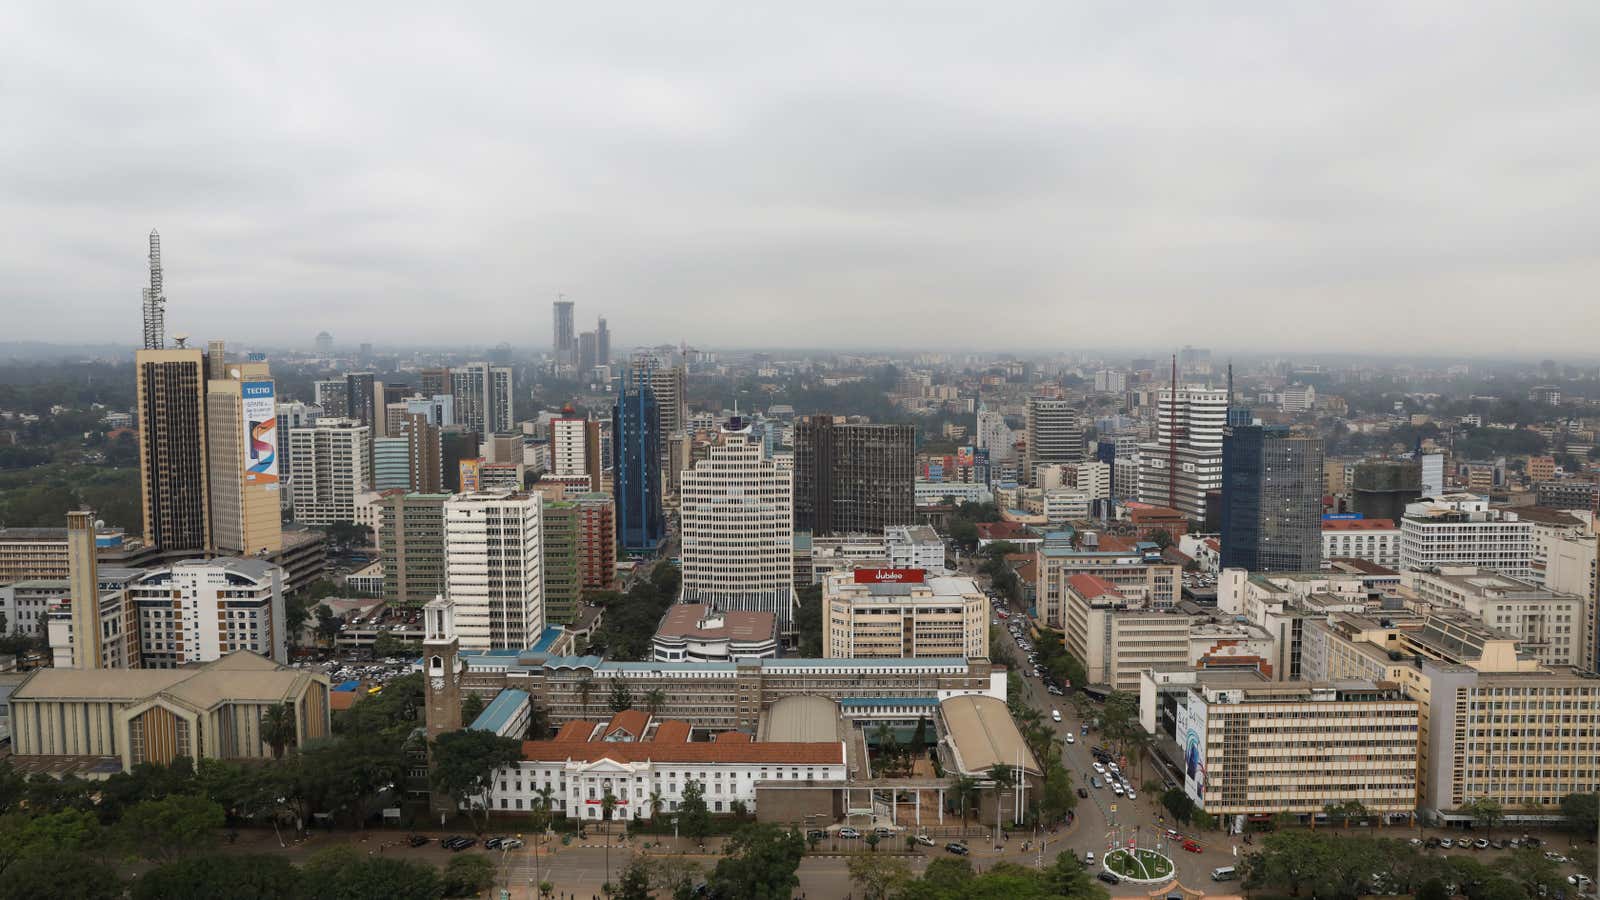 Nairobi wants to follow its own path.